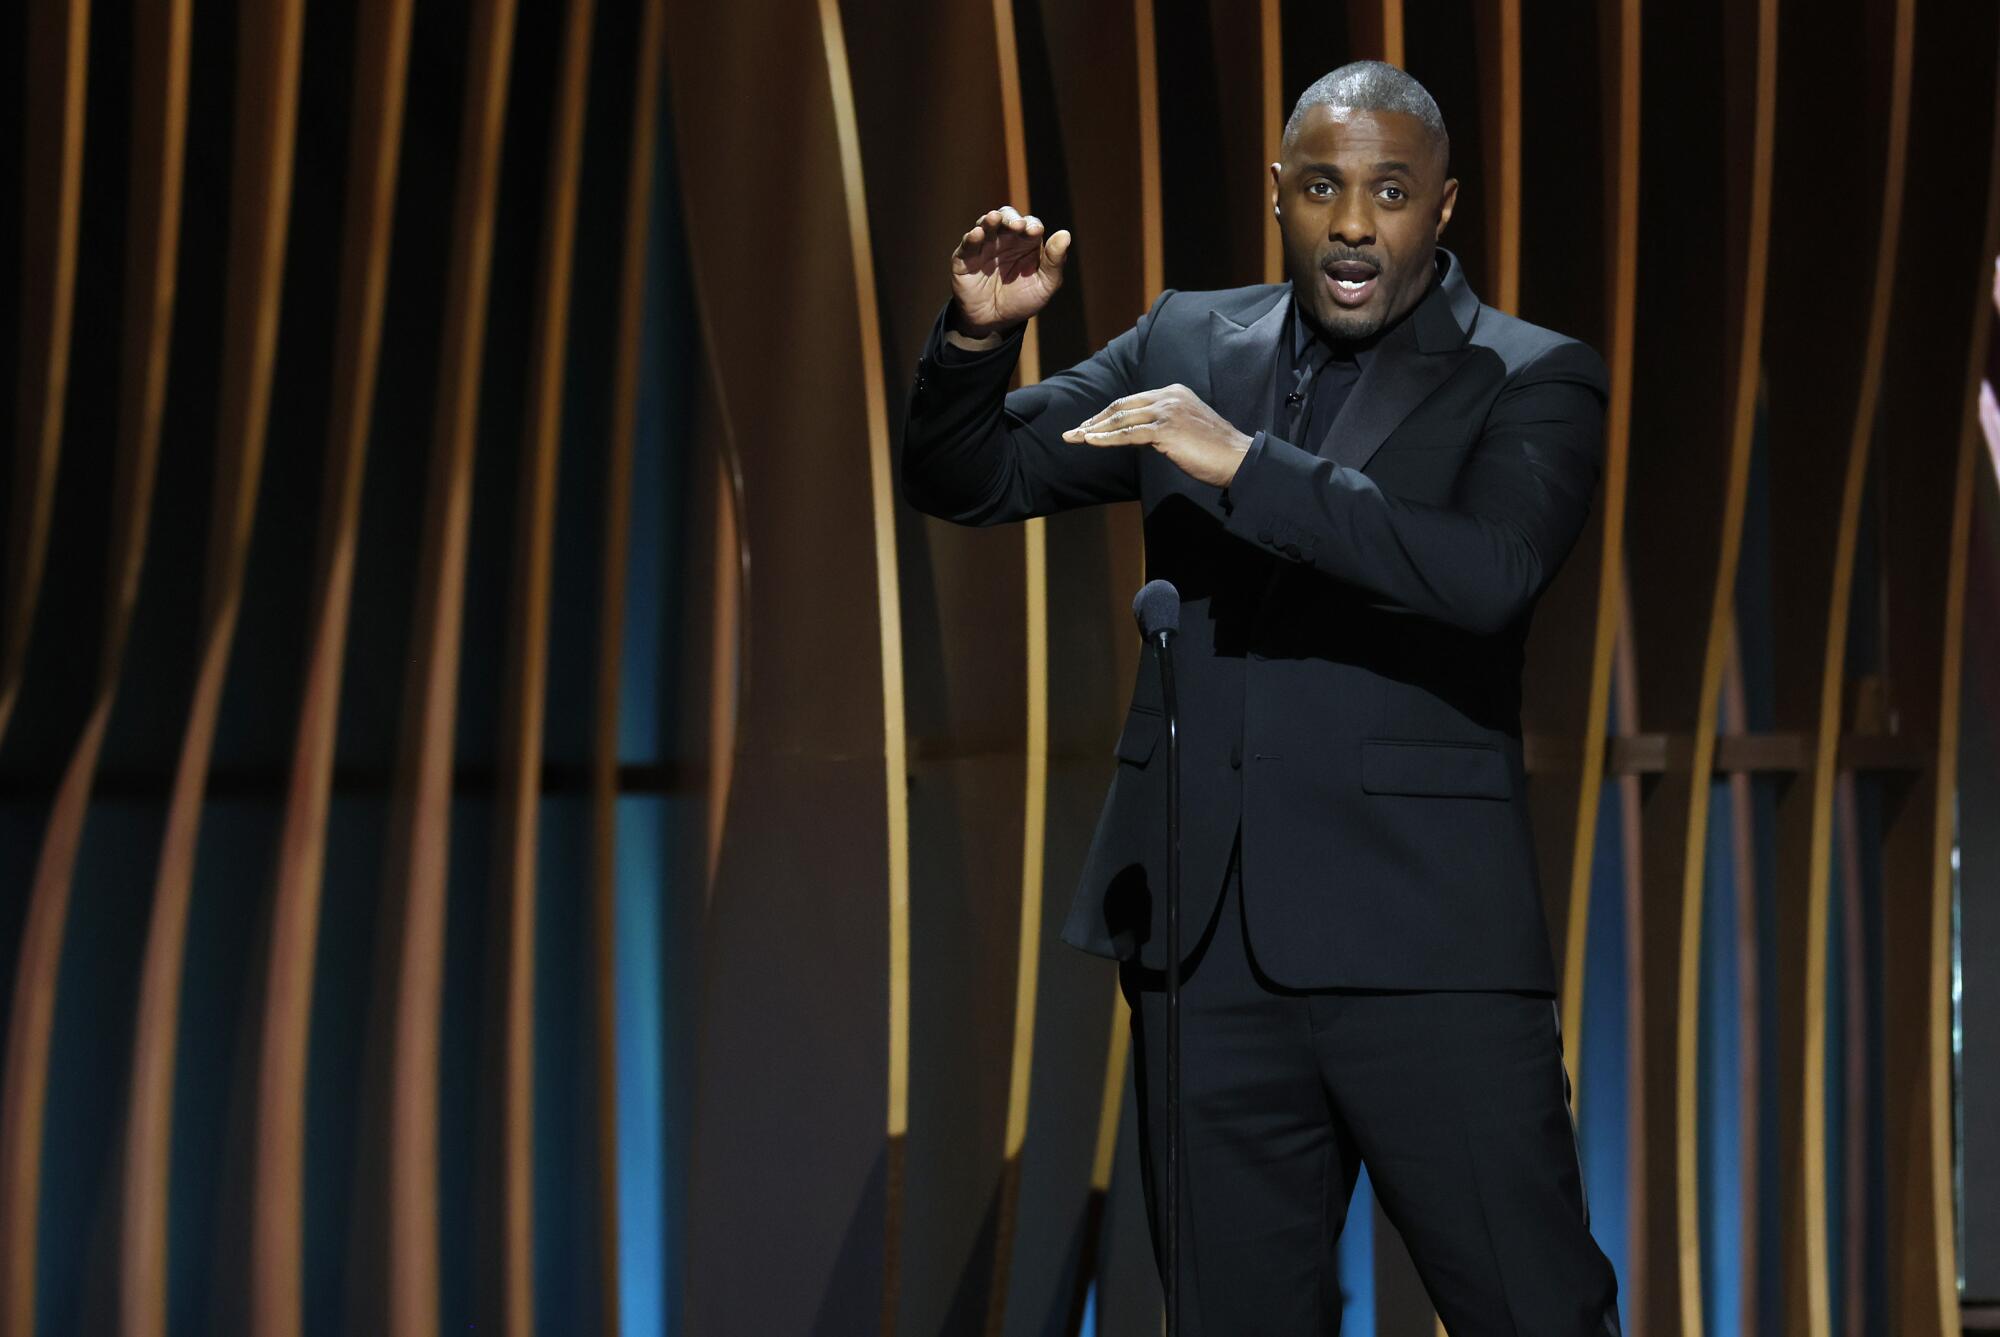 Idris Elba onstage at the Screen Actors Guild Awards.